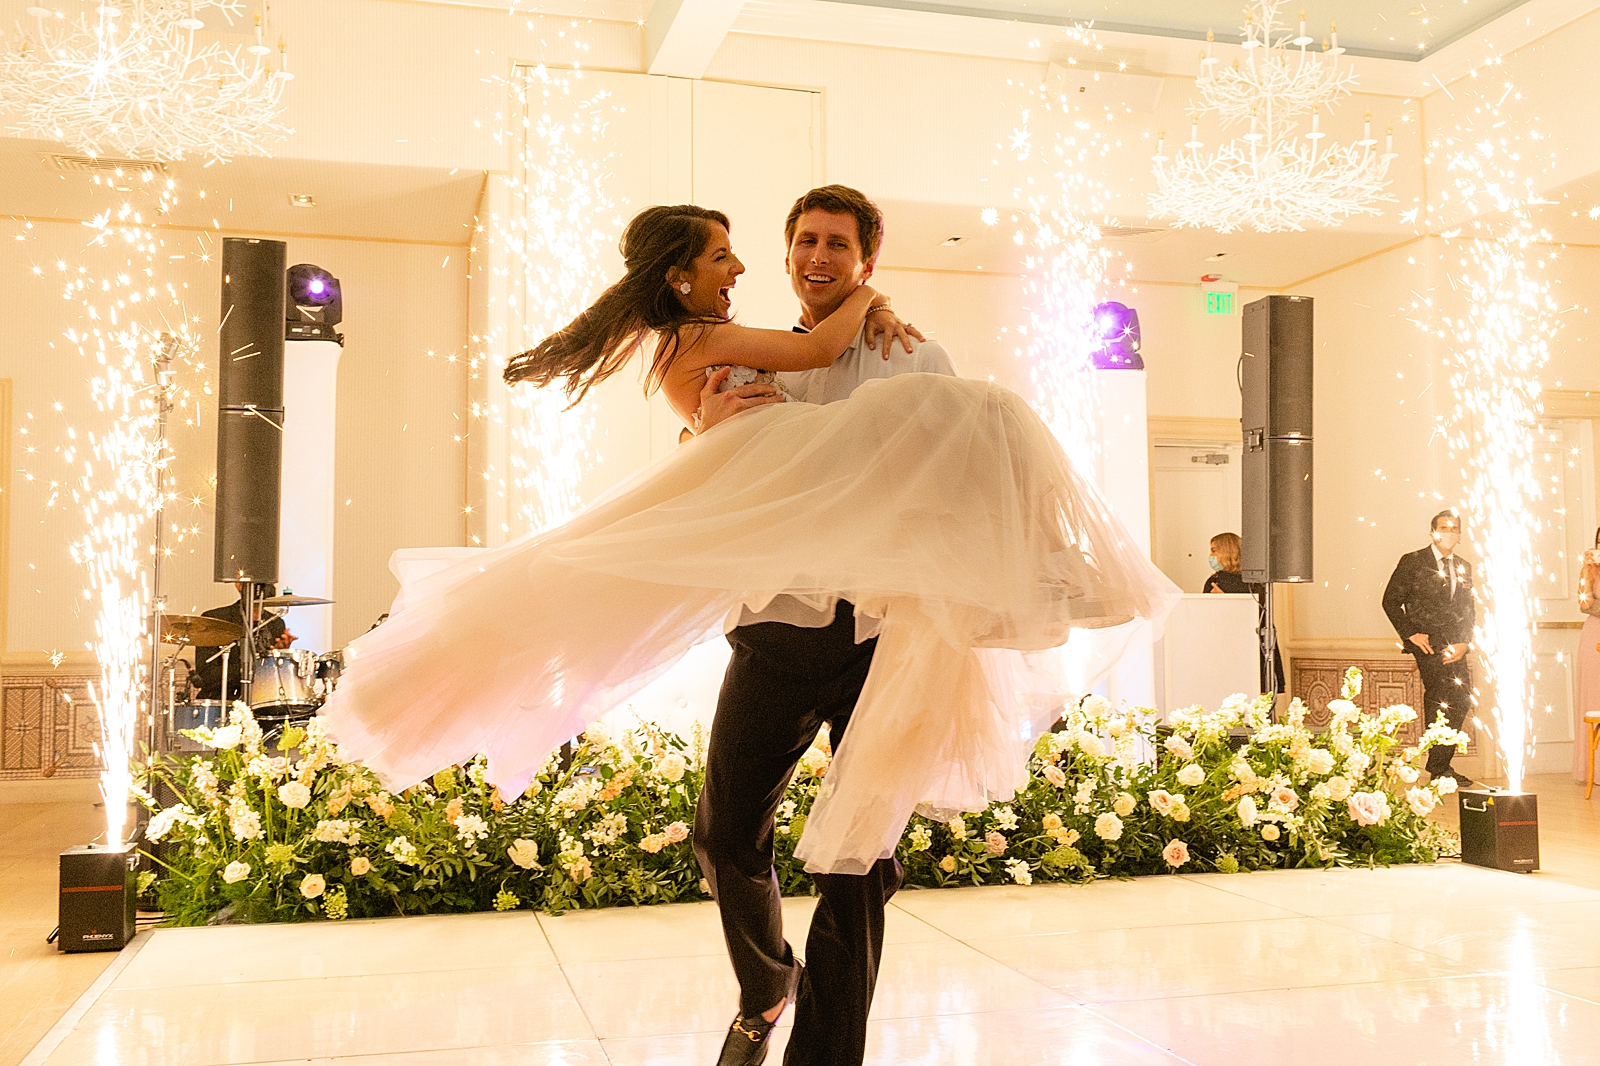 Groom carrying Bride in arms on dance floor